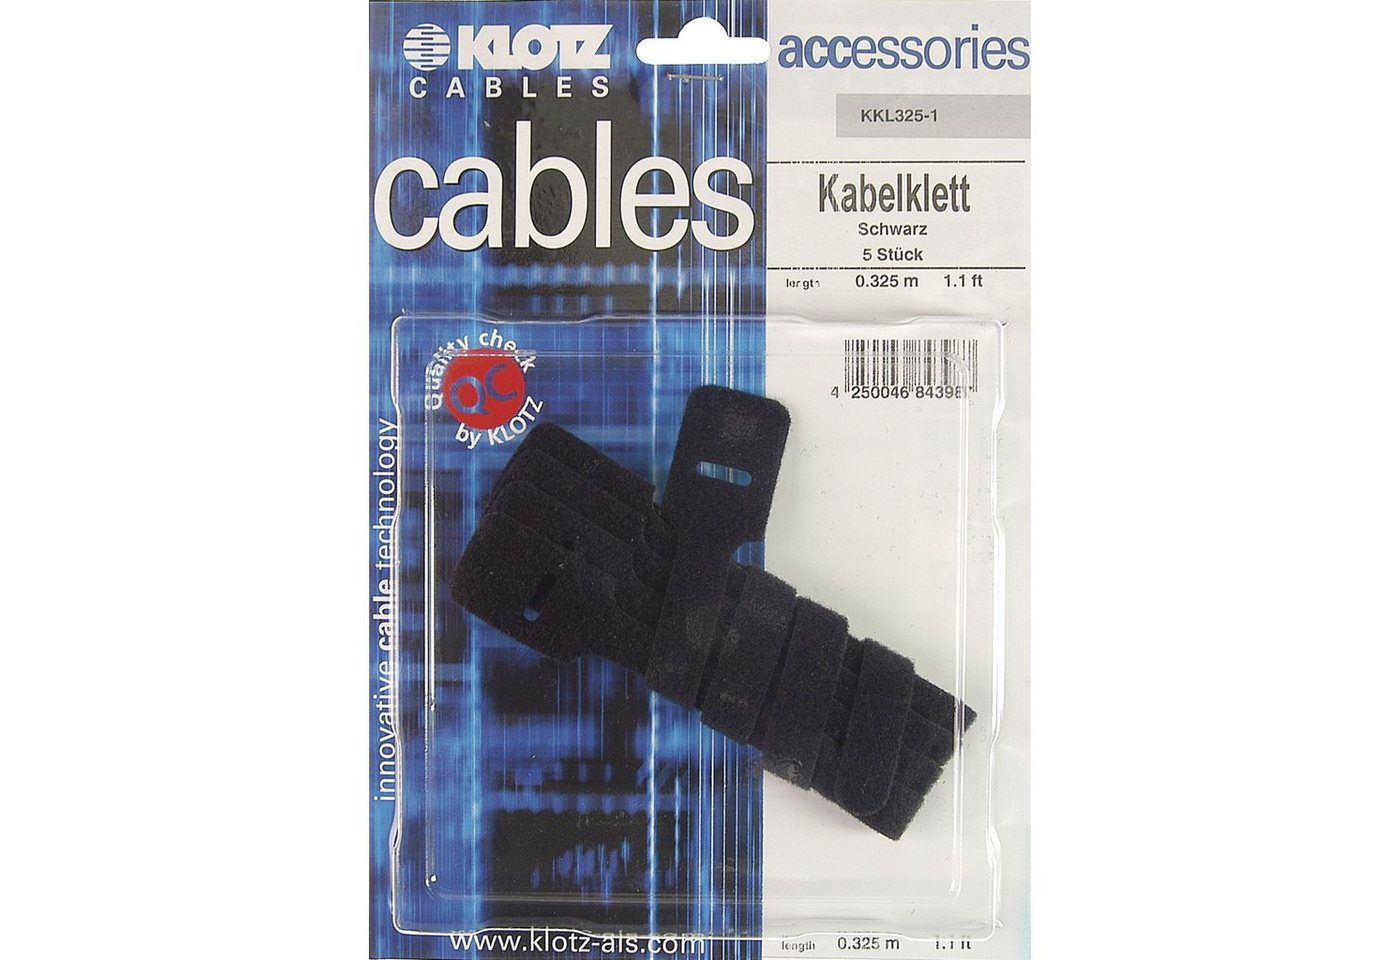 Klotz Cables Kabelzubehör, (KKL325-1 Kabelklett Stofföse schwarz, 5 Stück - Kabelklette) von Klotz Cables